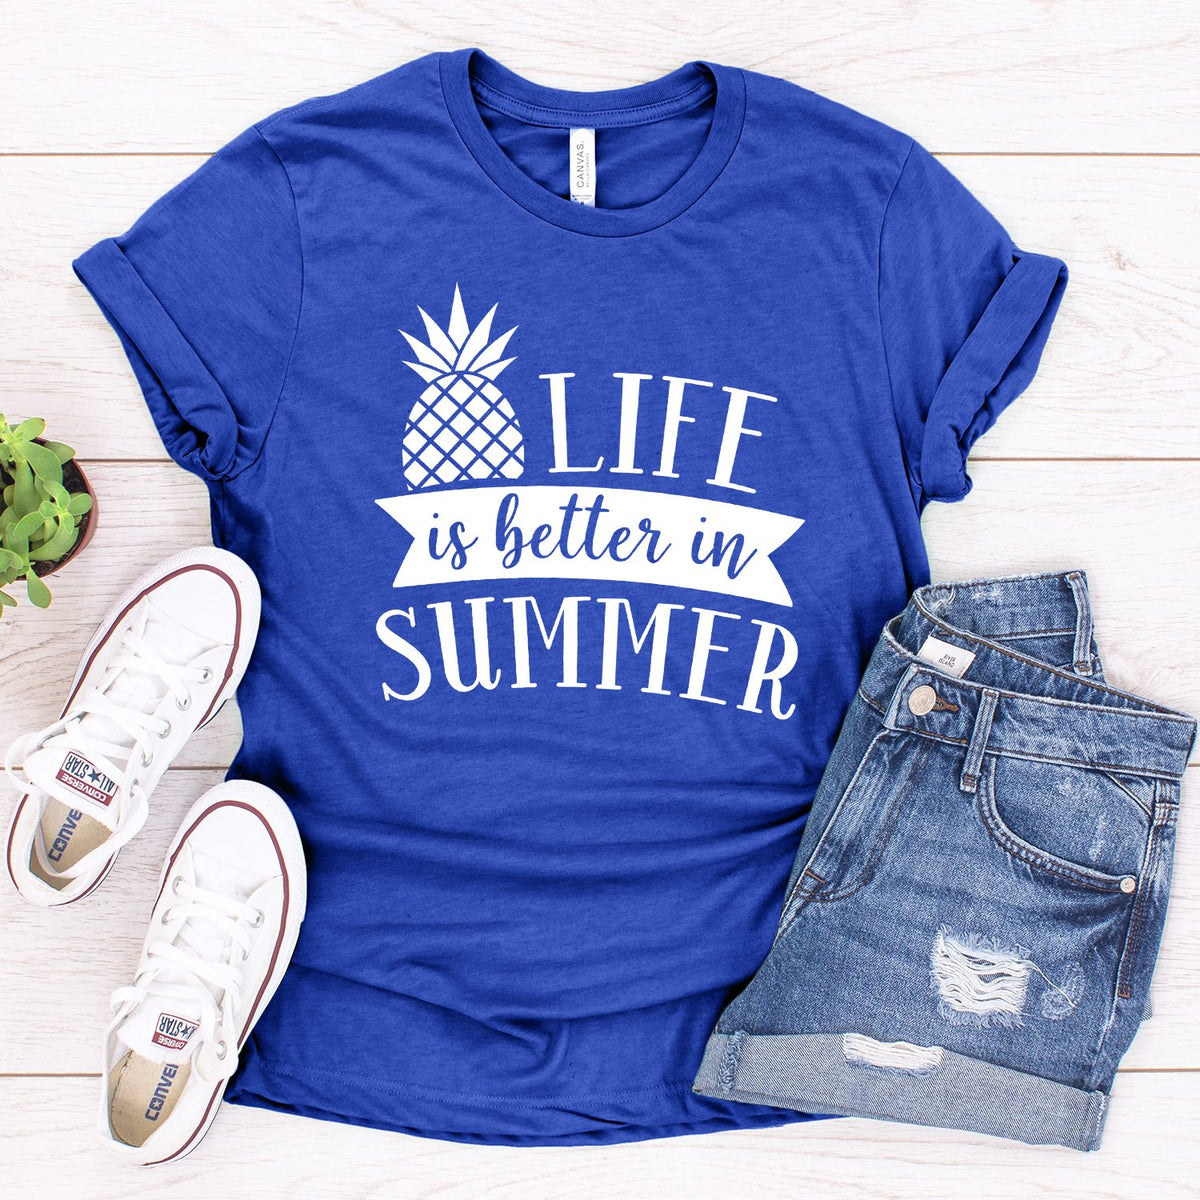 Life is Better in Summer - Short Sleeve Tee Shirt